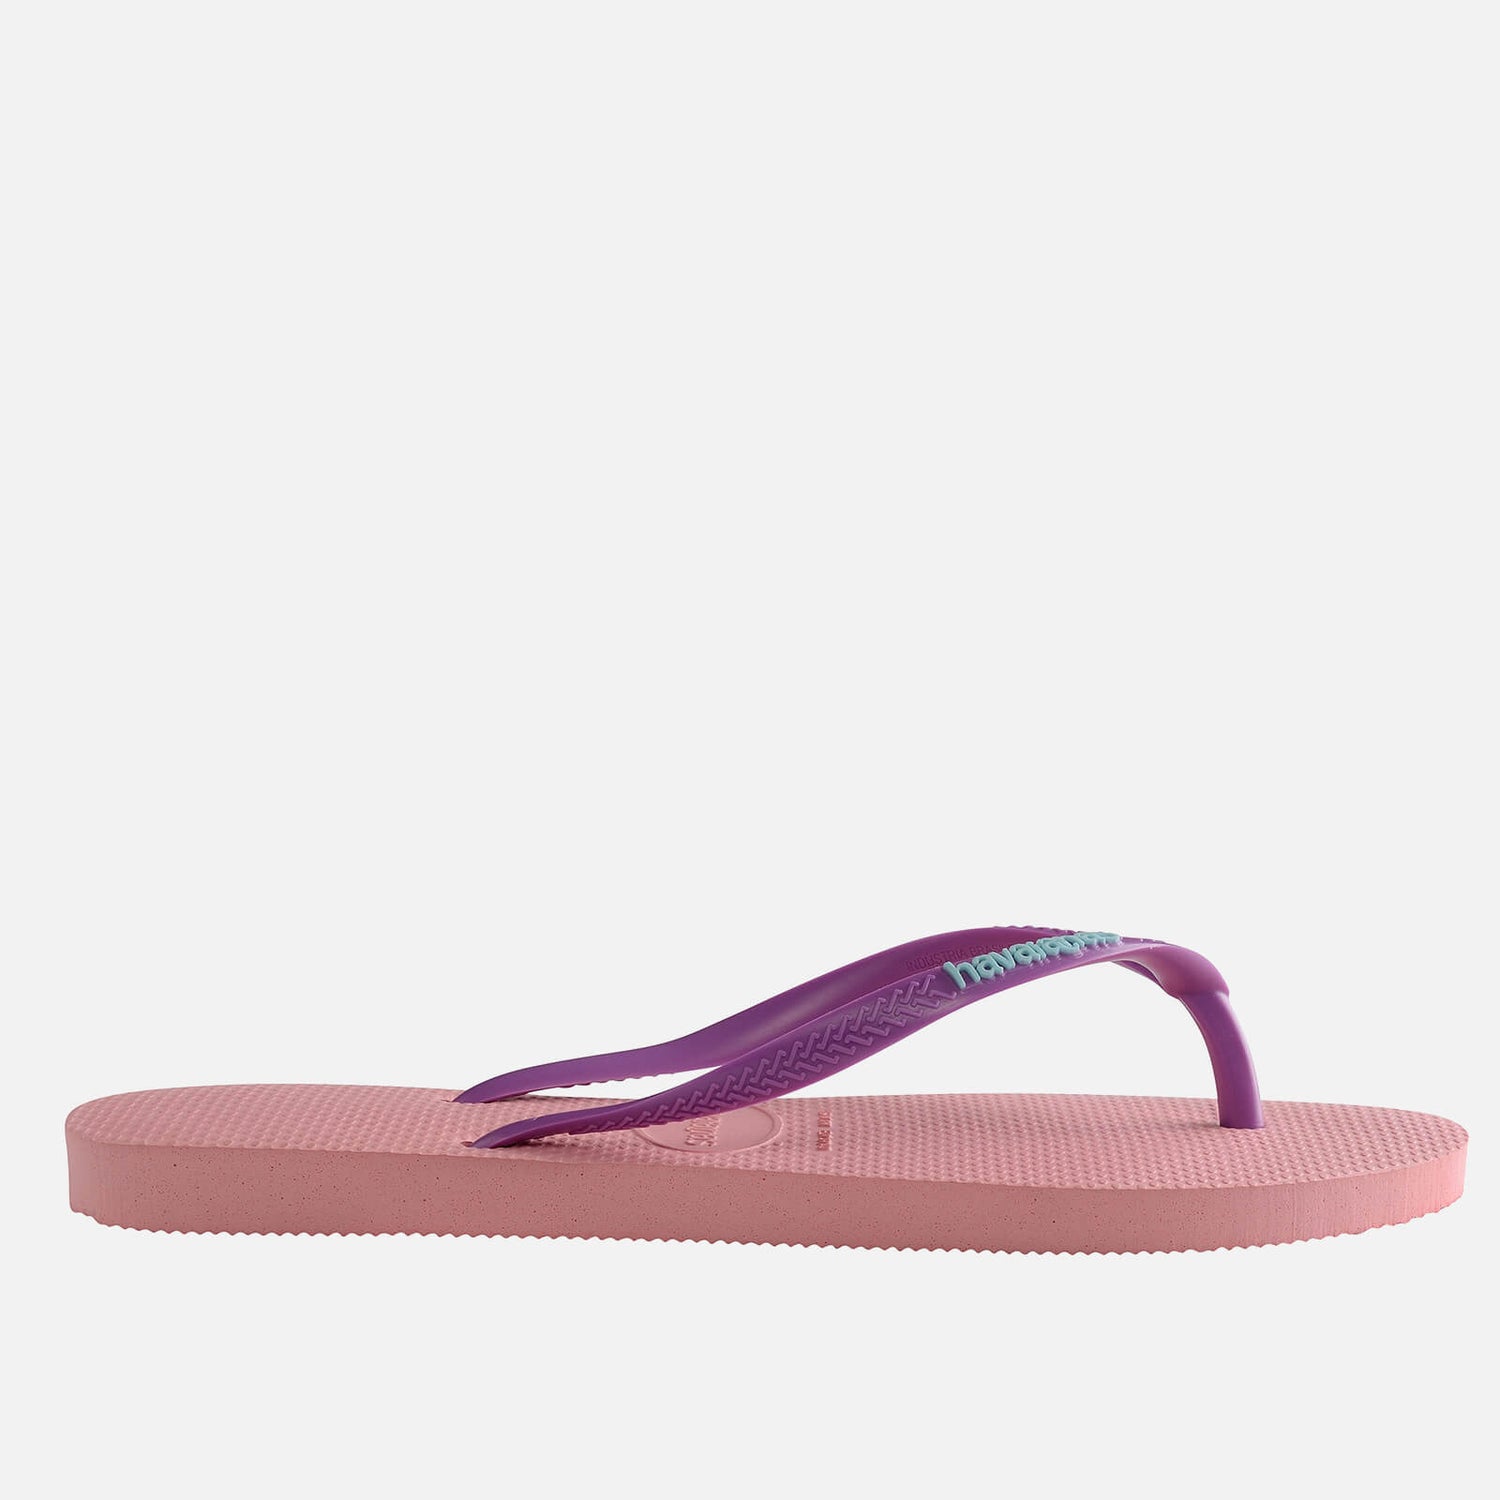 Havaianas Women's Slim Logo Flip Flops - Macaron Pink